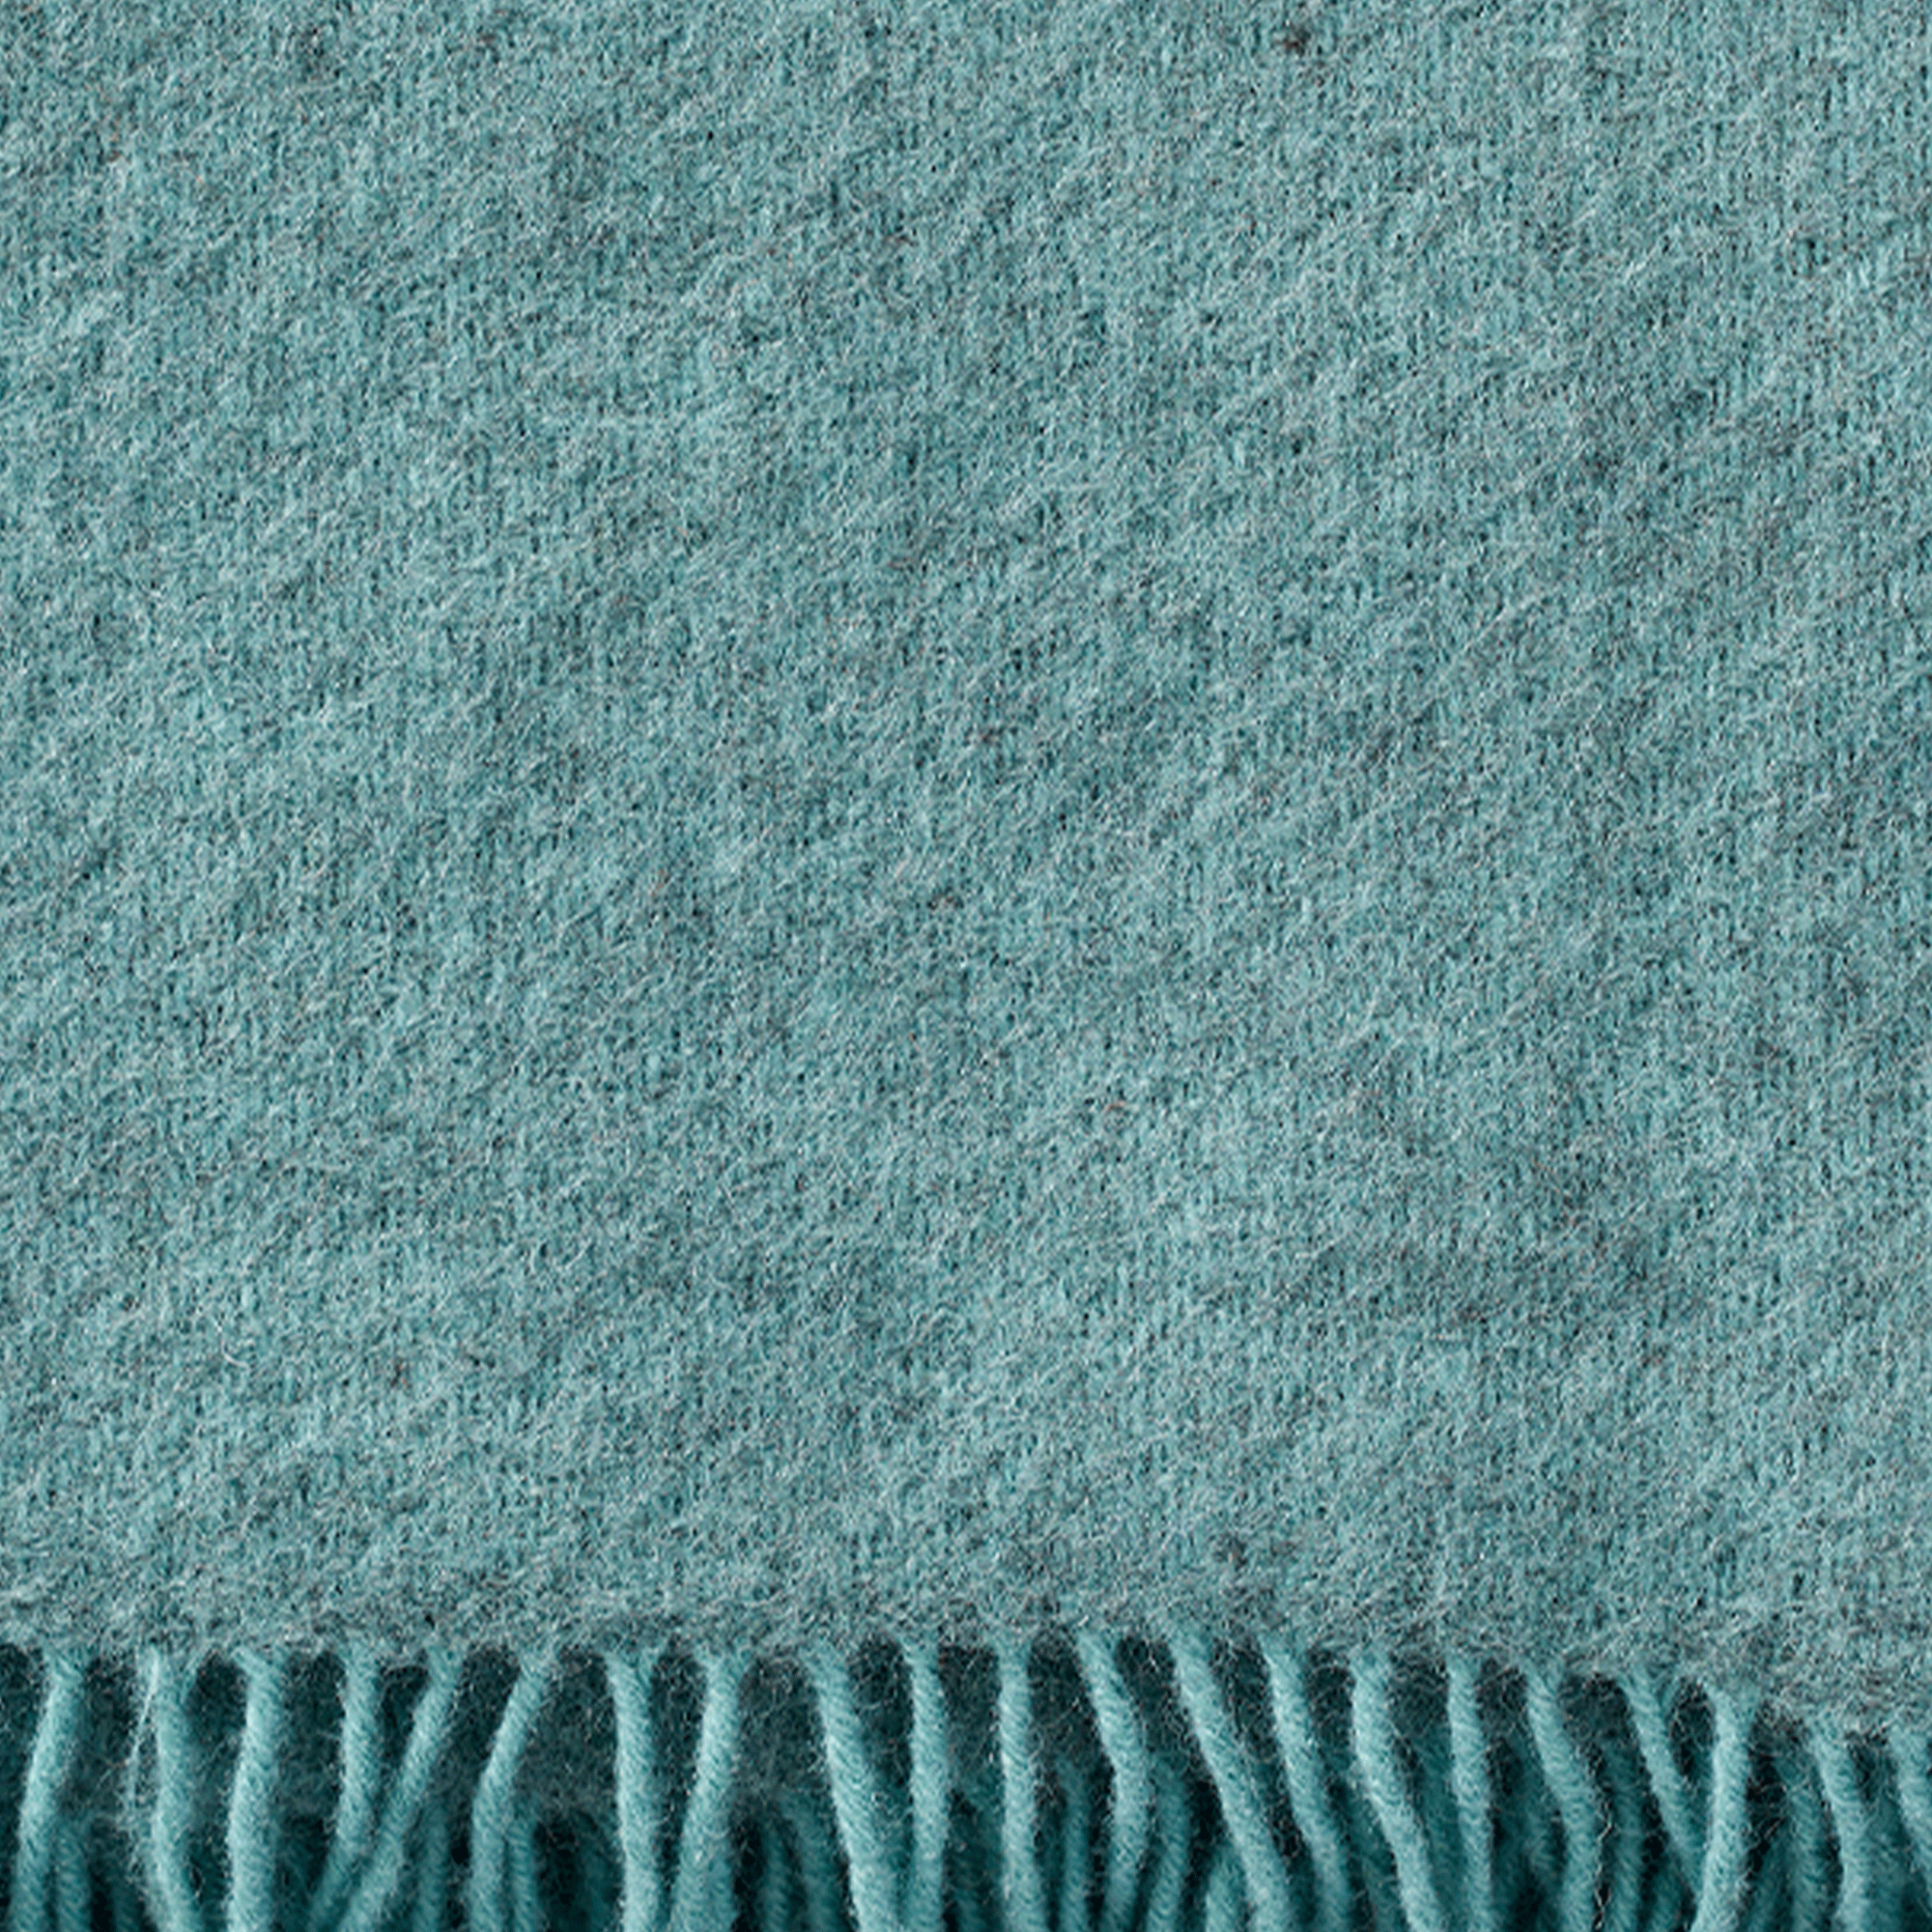 Gotland Turquoise 130x200cm Brushed Wool Throw